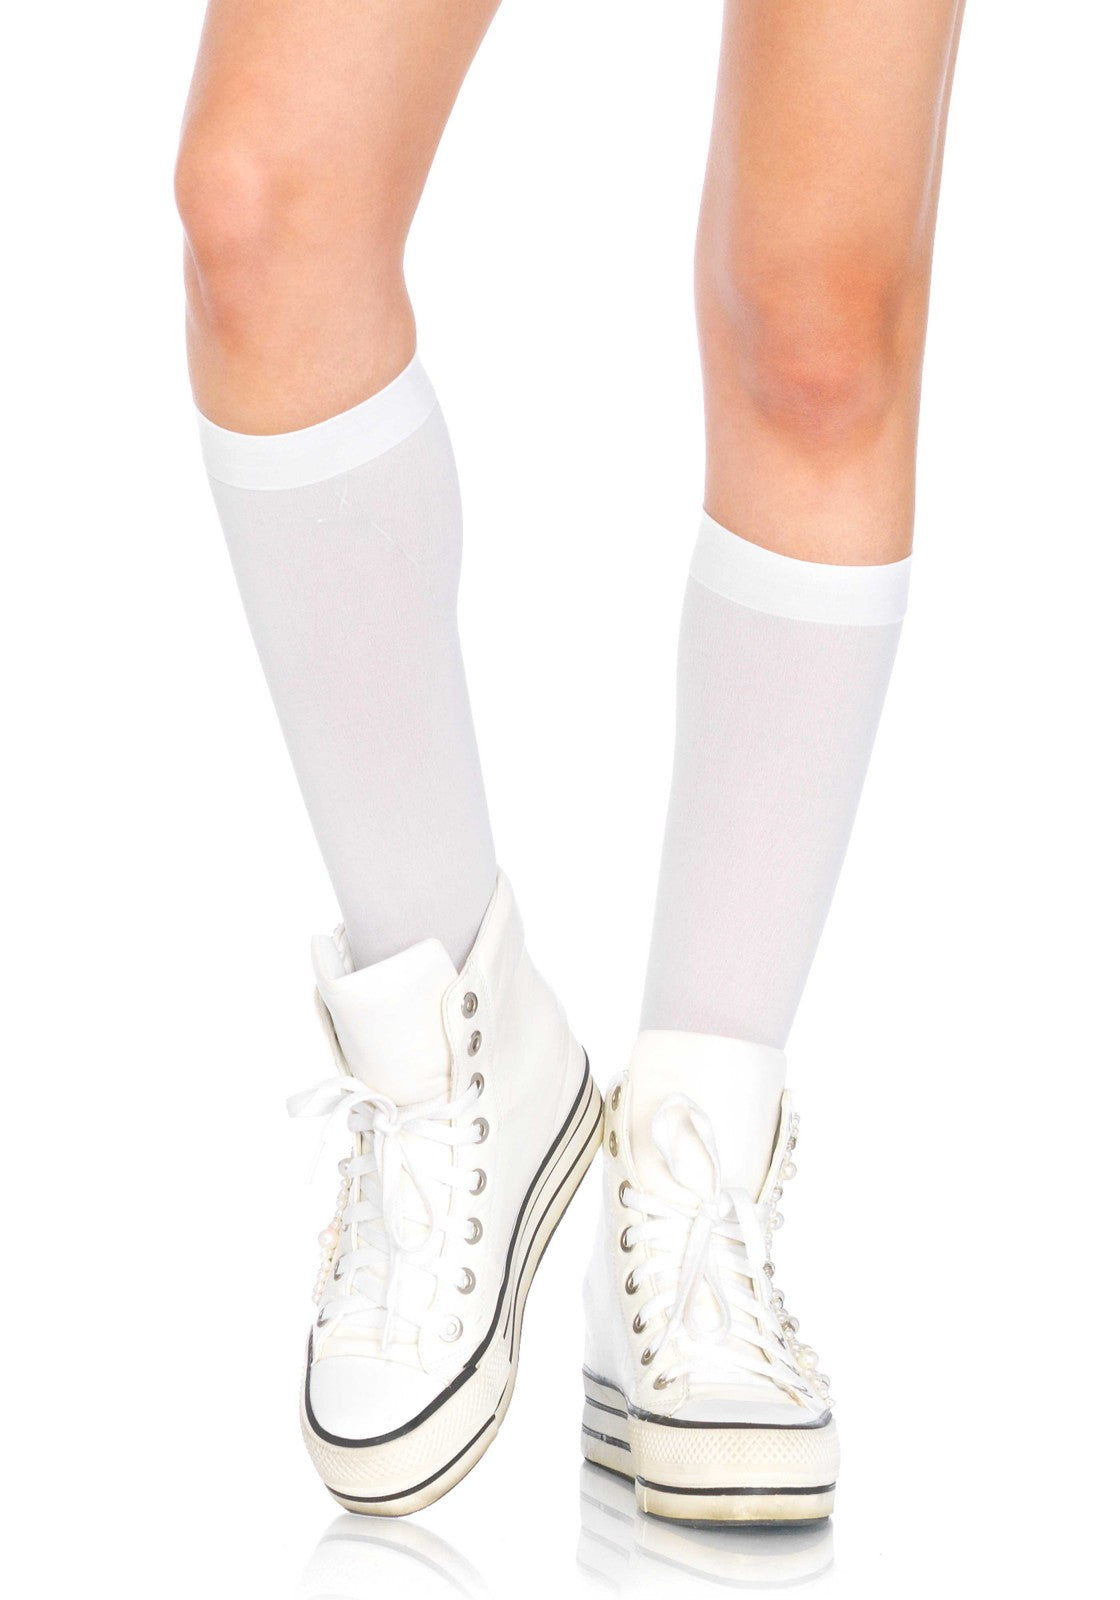 Leg Avenue 5572 Nylon Knee-highs - Plain white opaque knee length popsocks with plain cuff.